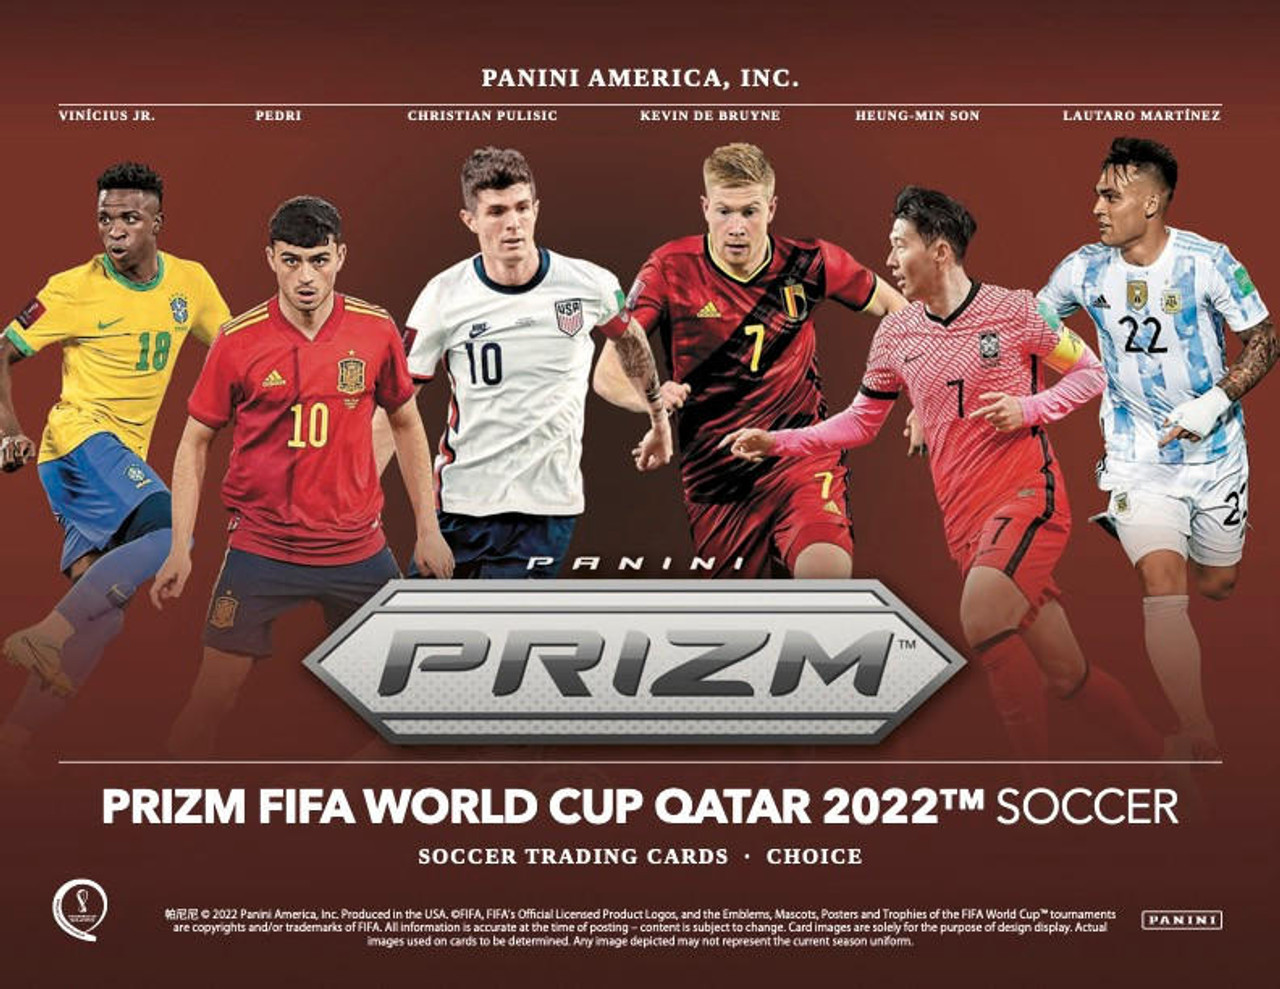 The Qatari trio who helped bring the FIFA World Cup 2022™ mascot